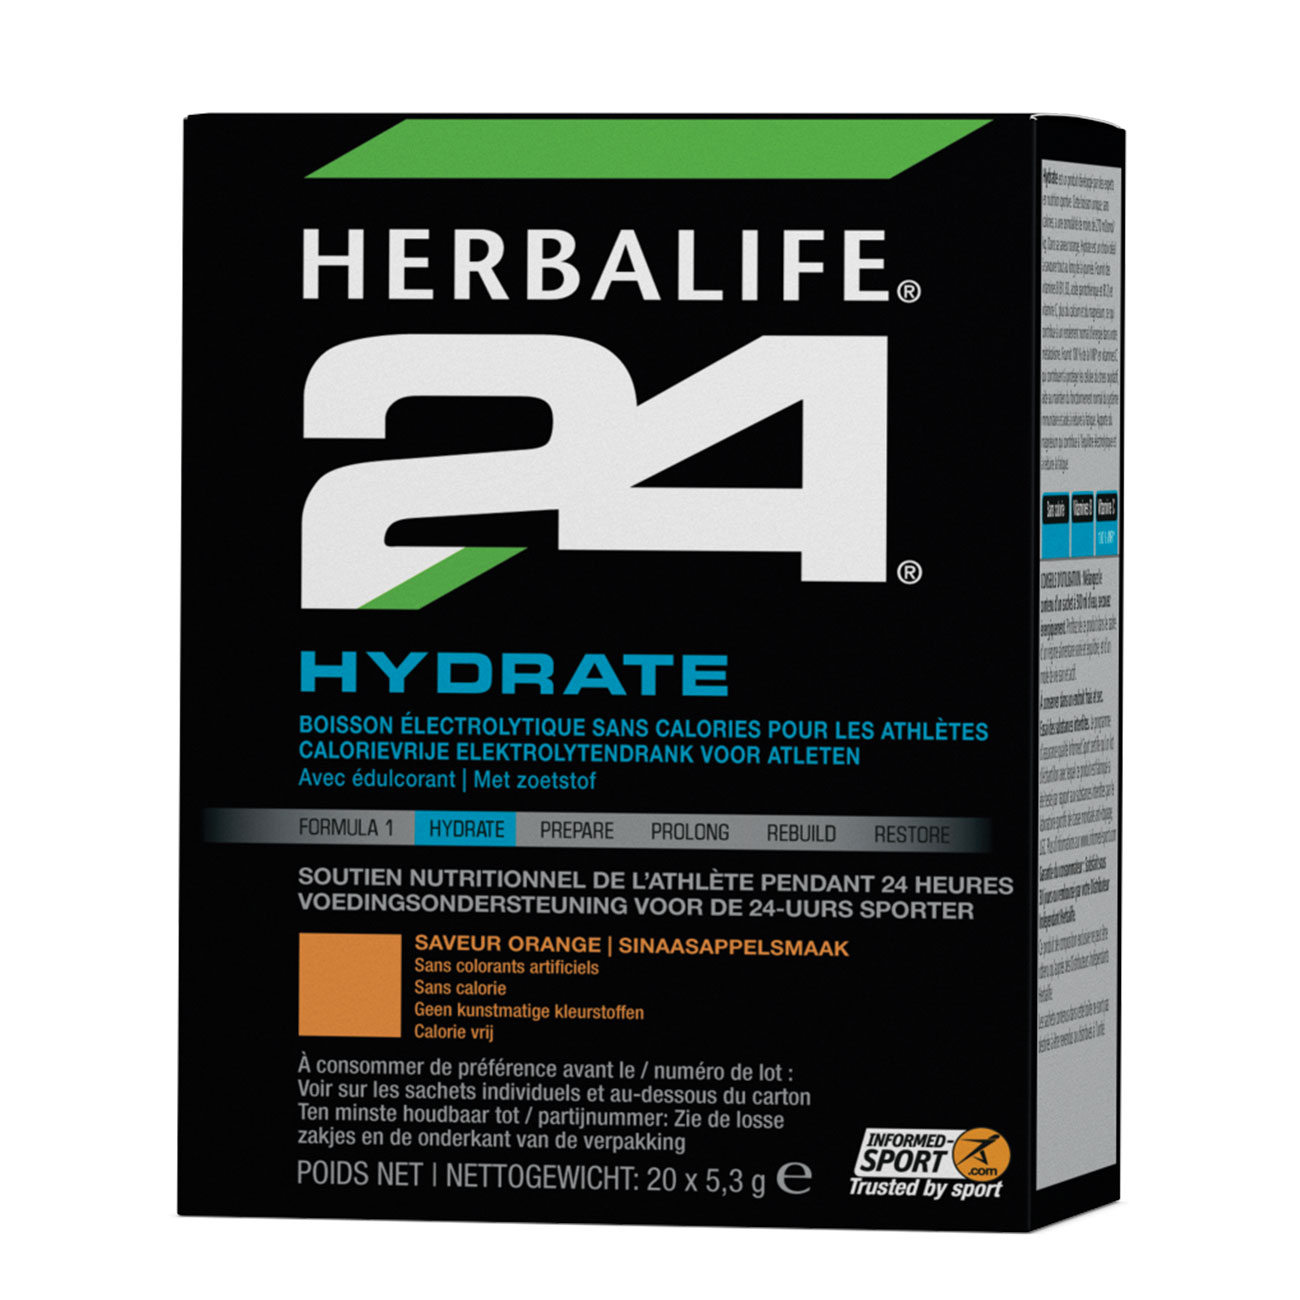 Herbalife24® Hydrate Boissons à base d'électrolytes Orange product shot